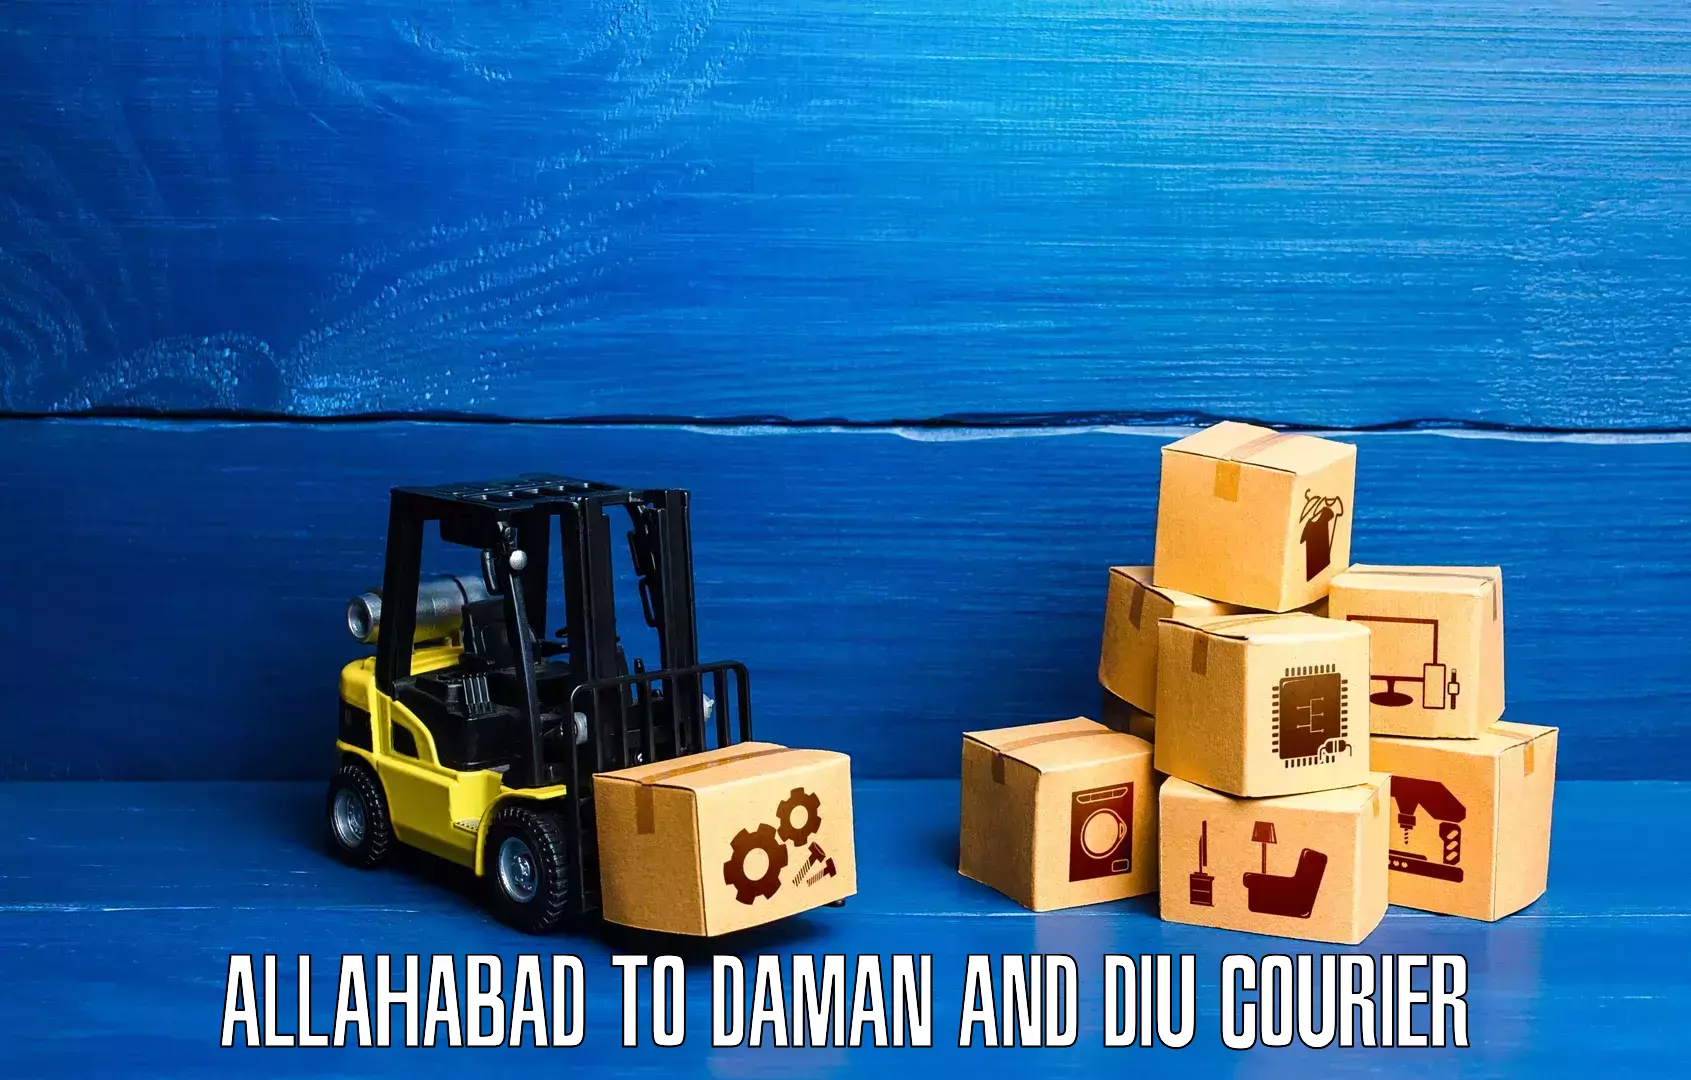 Global shipping networks Allahabad to Daman